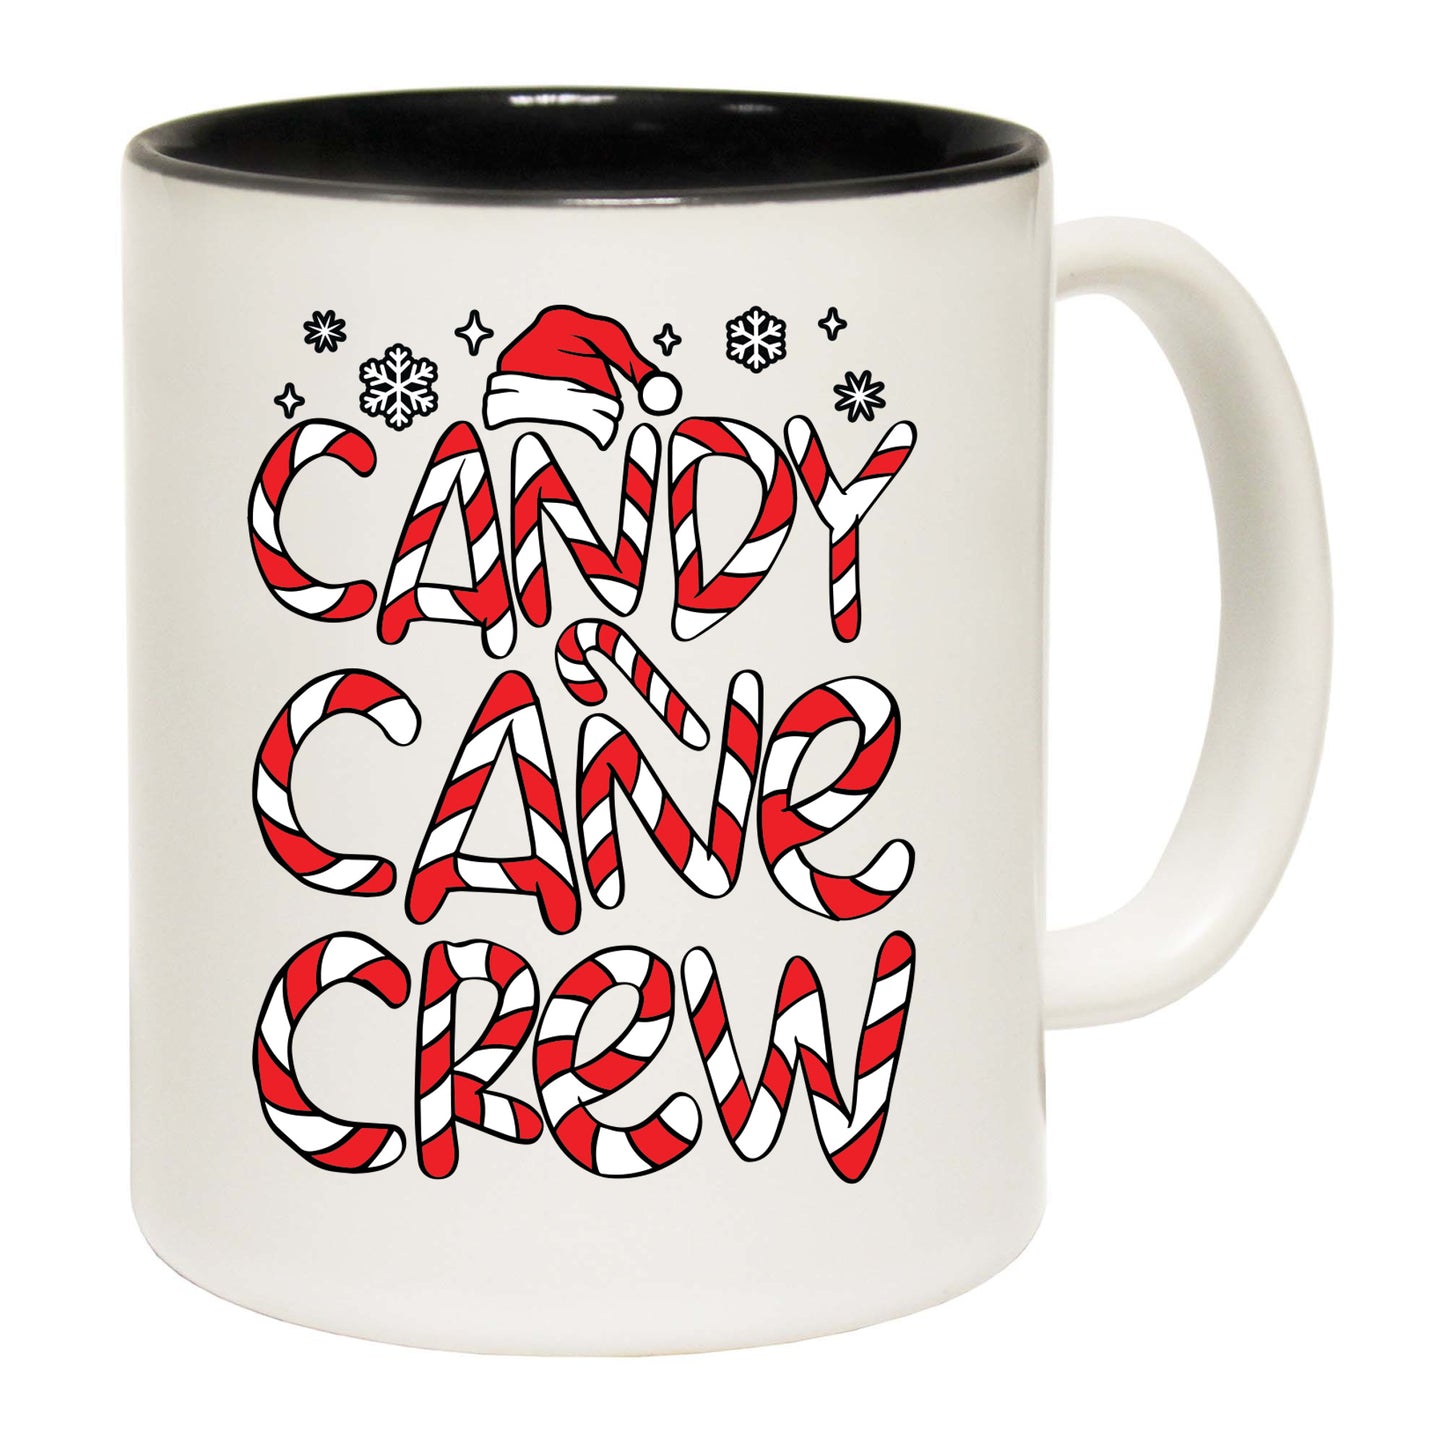 Christmas Candy Cane - Funny Coffee Mug